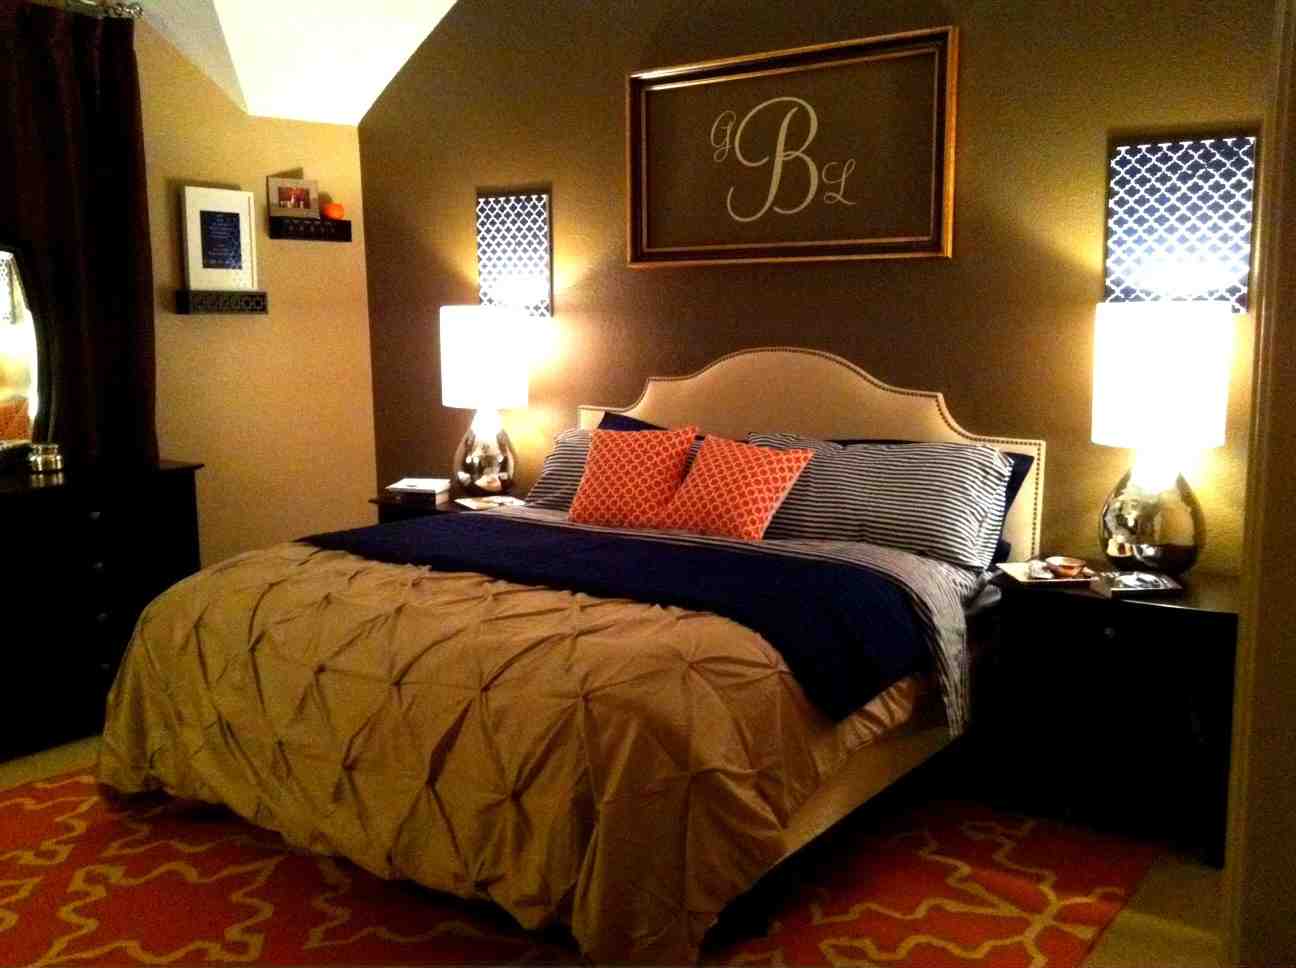 Master Bedroom Wall Decor Ideas - Decor Ideas